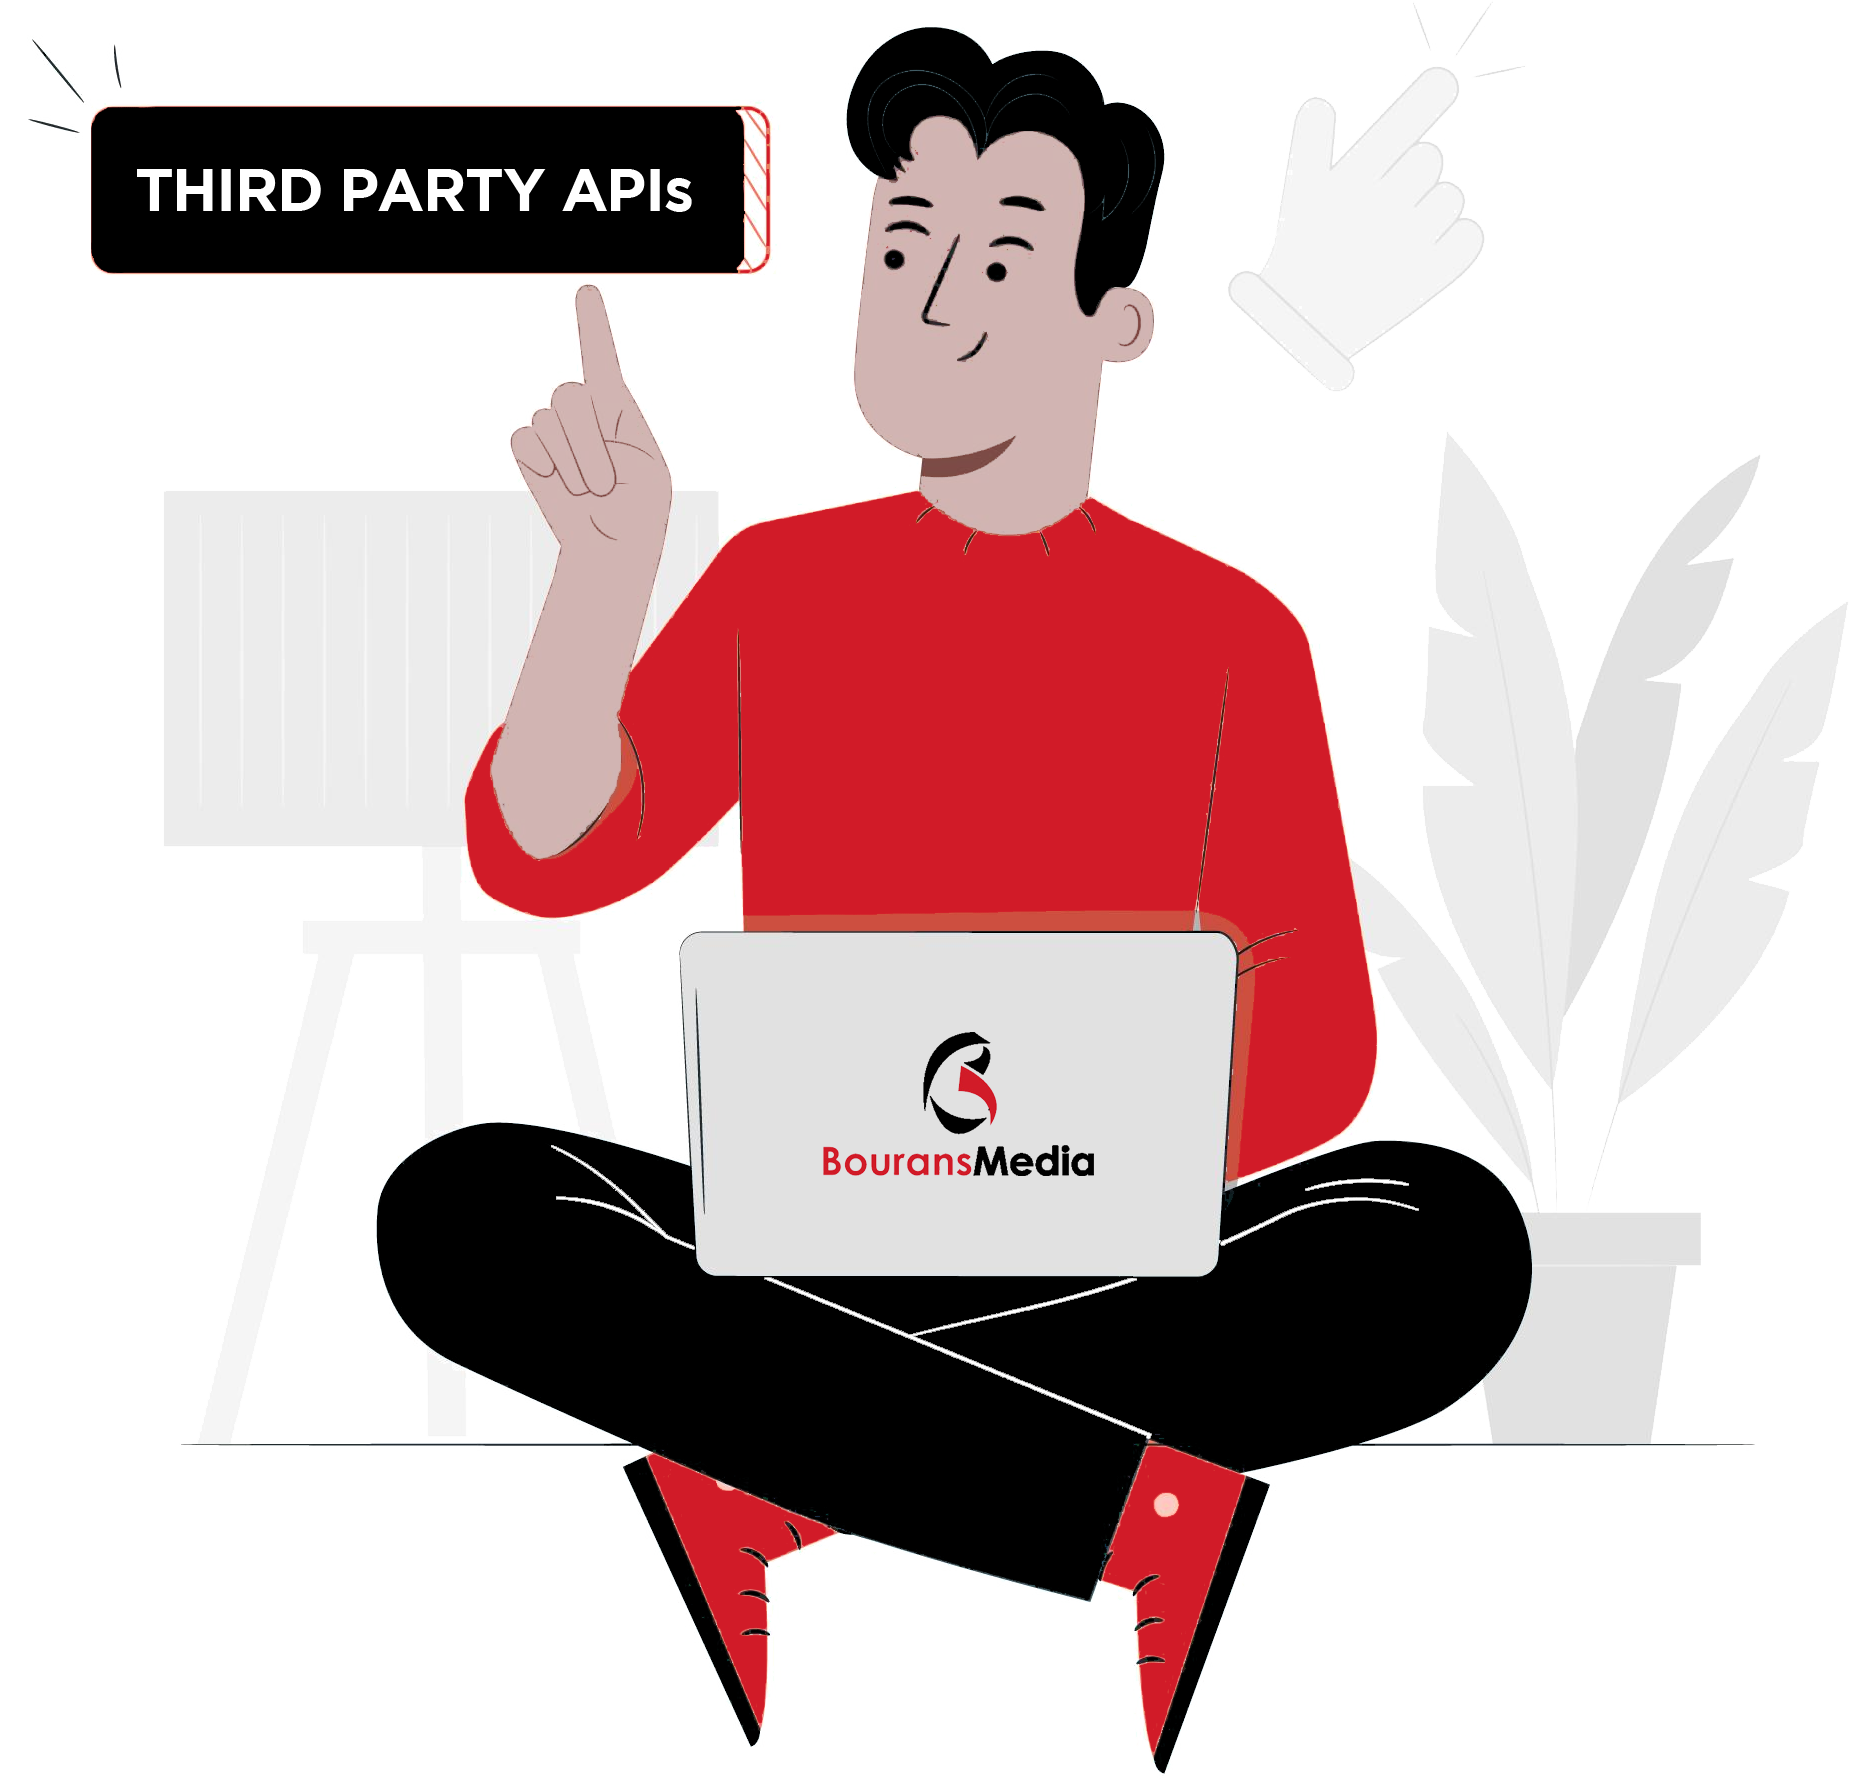 Third Party API Integration Services